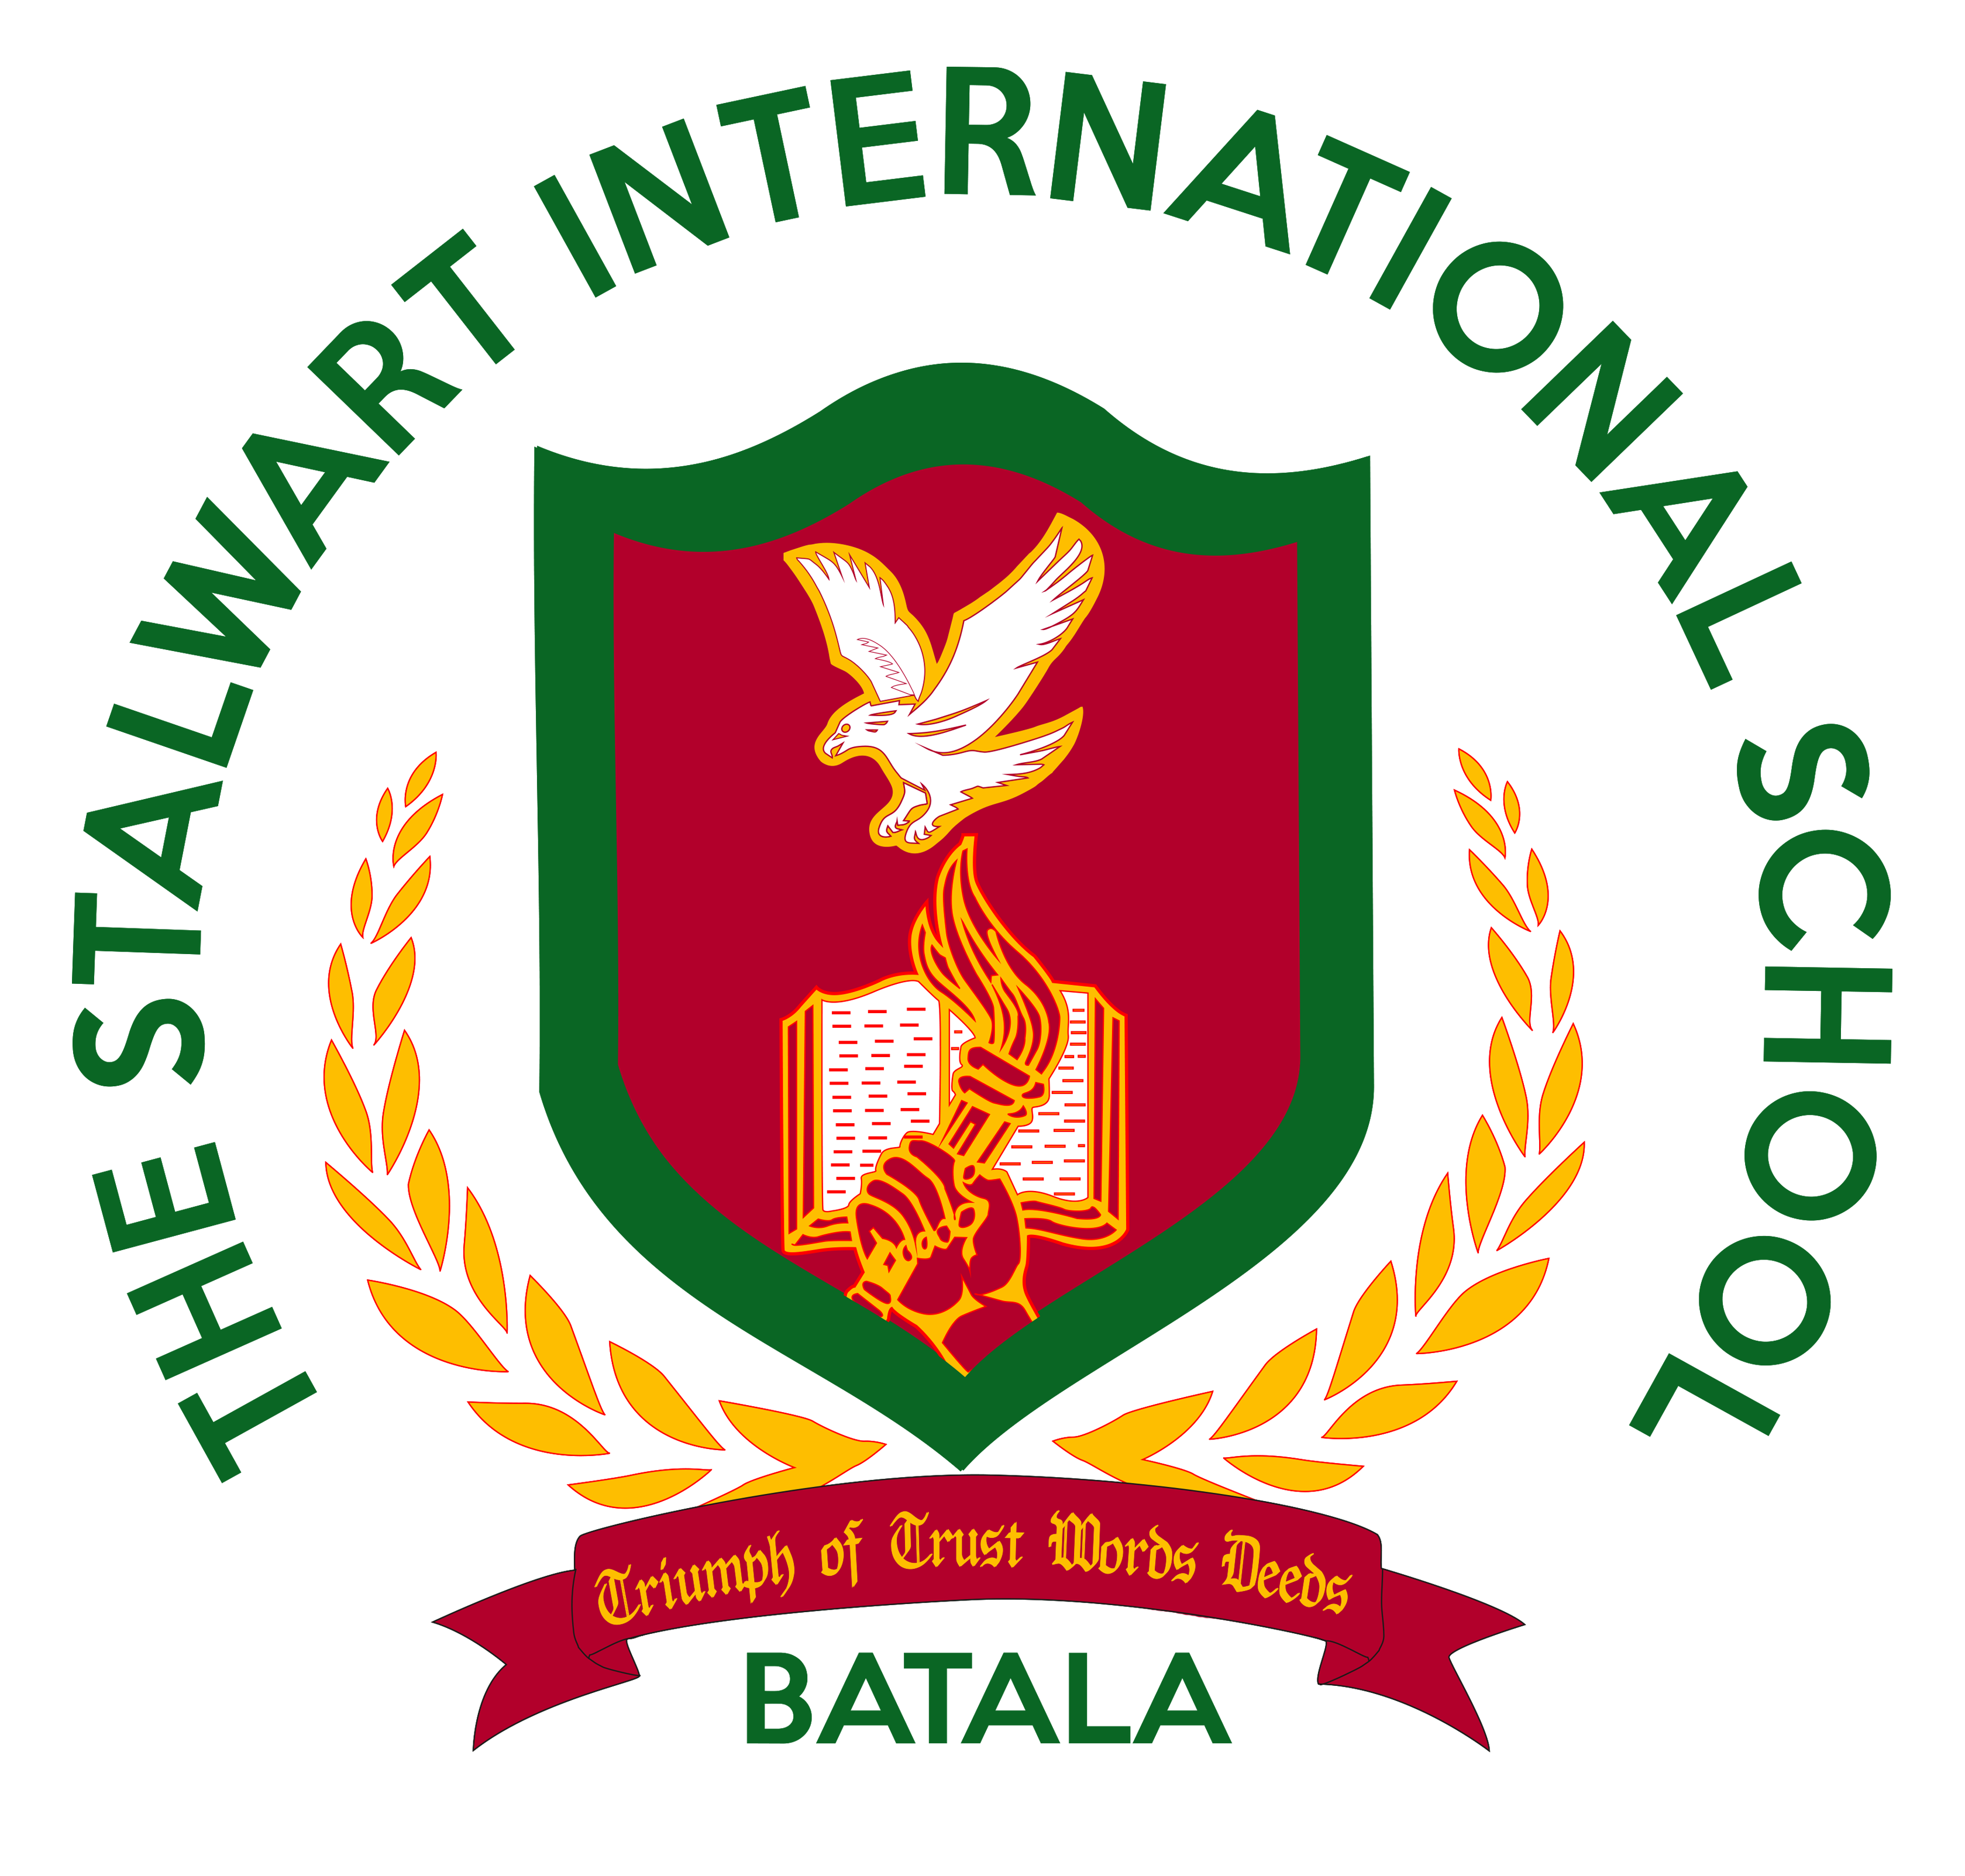 The Stalwart International School, Batala